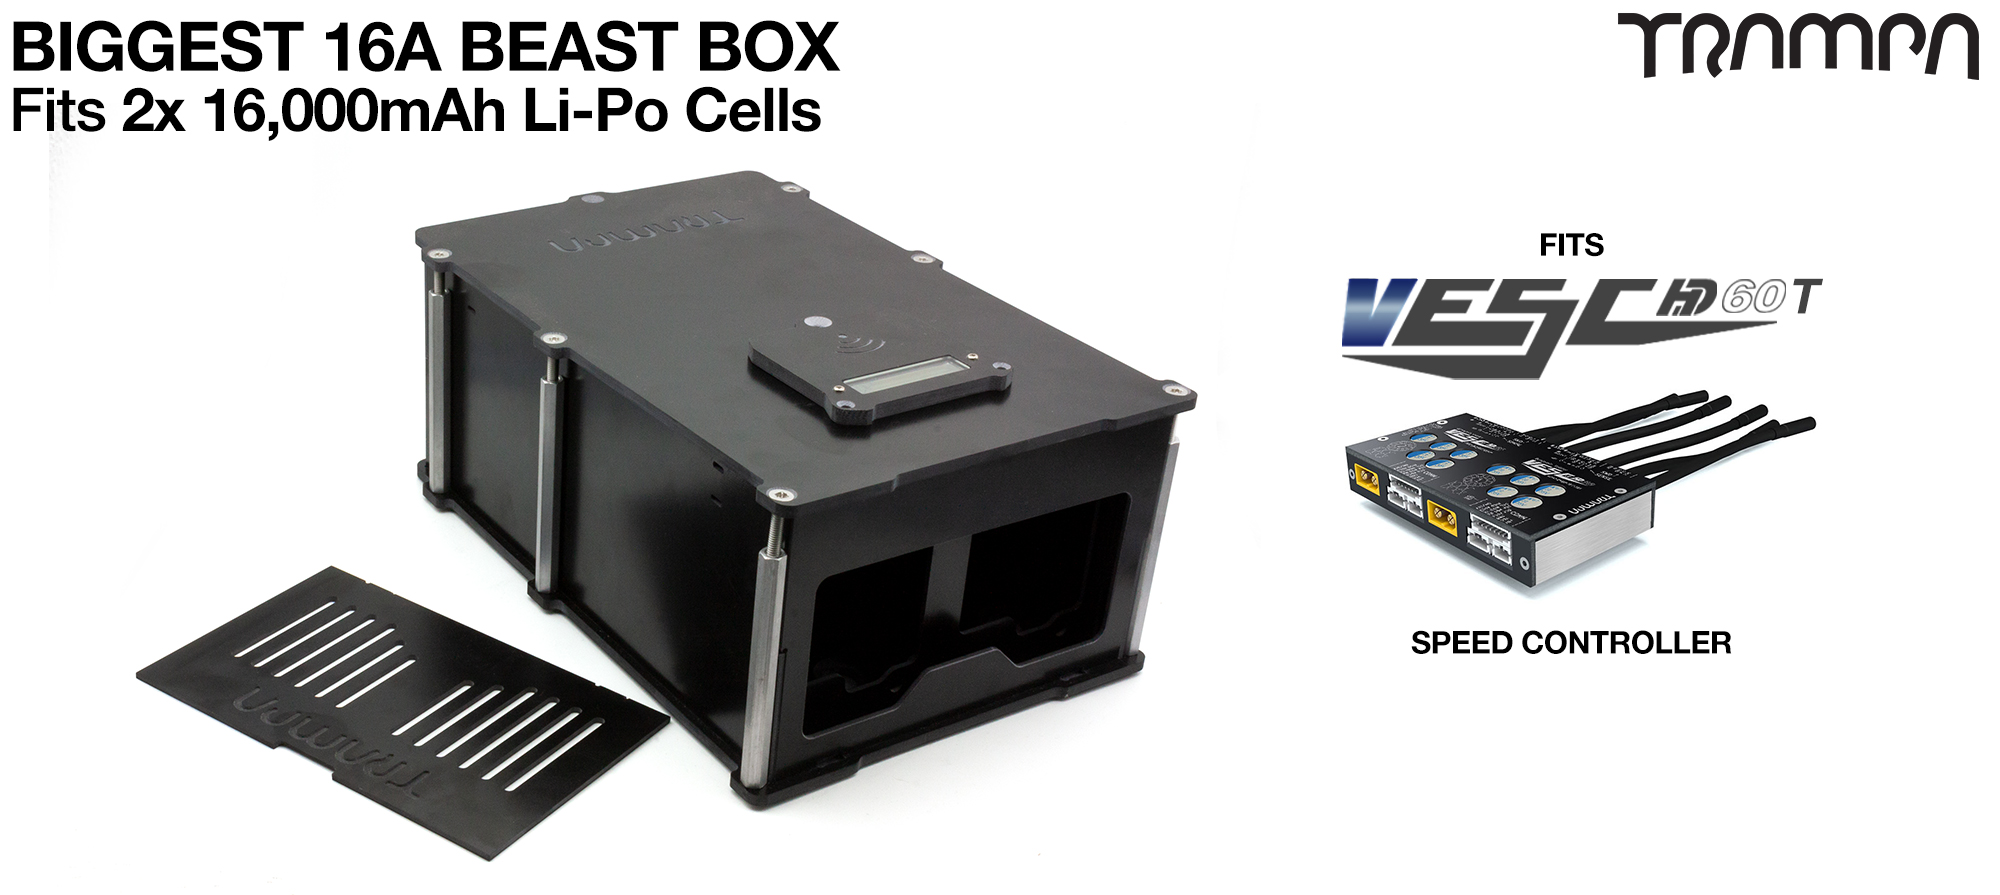 16A BIGGEST BEAST Box fits 2x 6s 16A Li-Po cells & either 1x VESC HD-60T or 1 or 2  VESC 6 